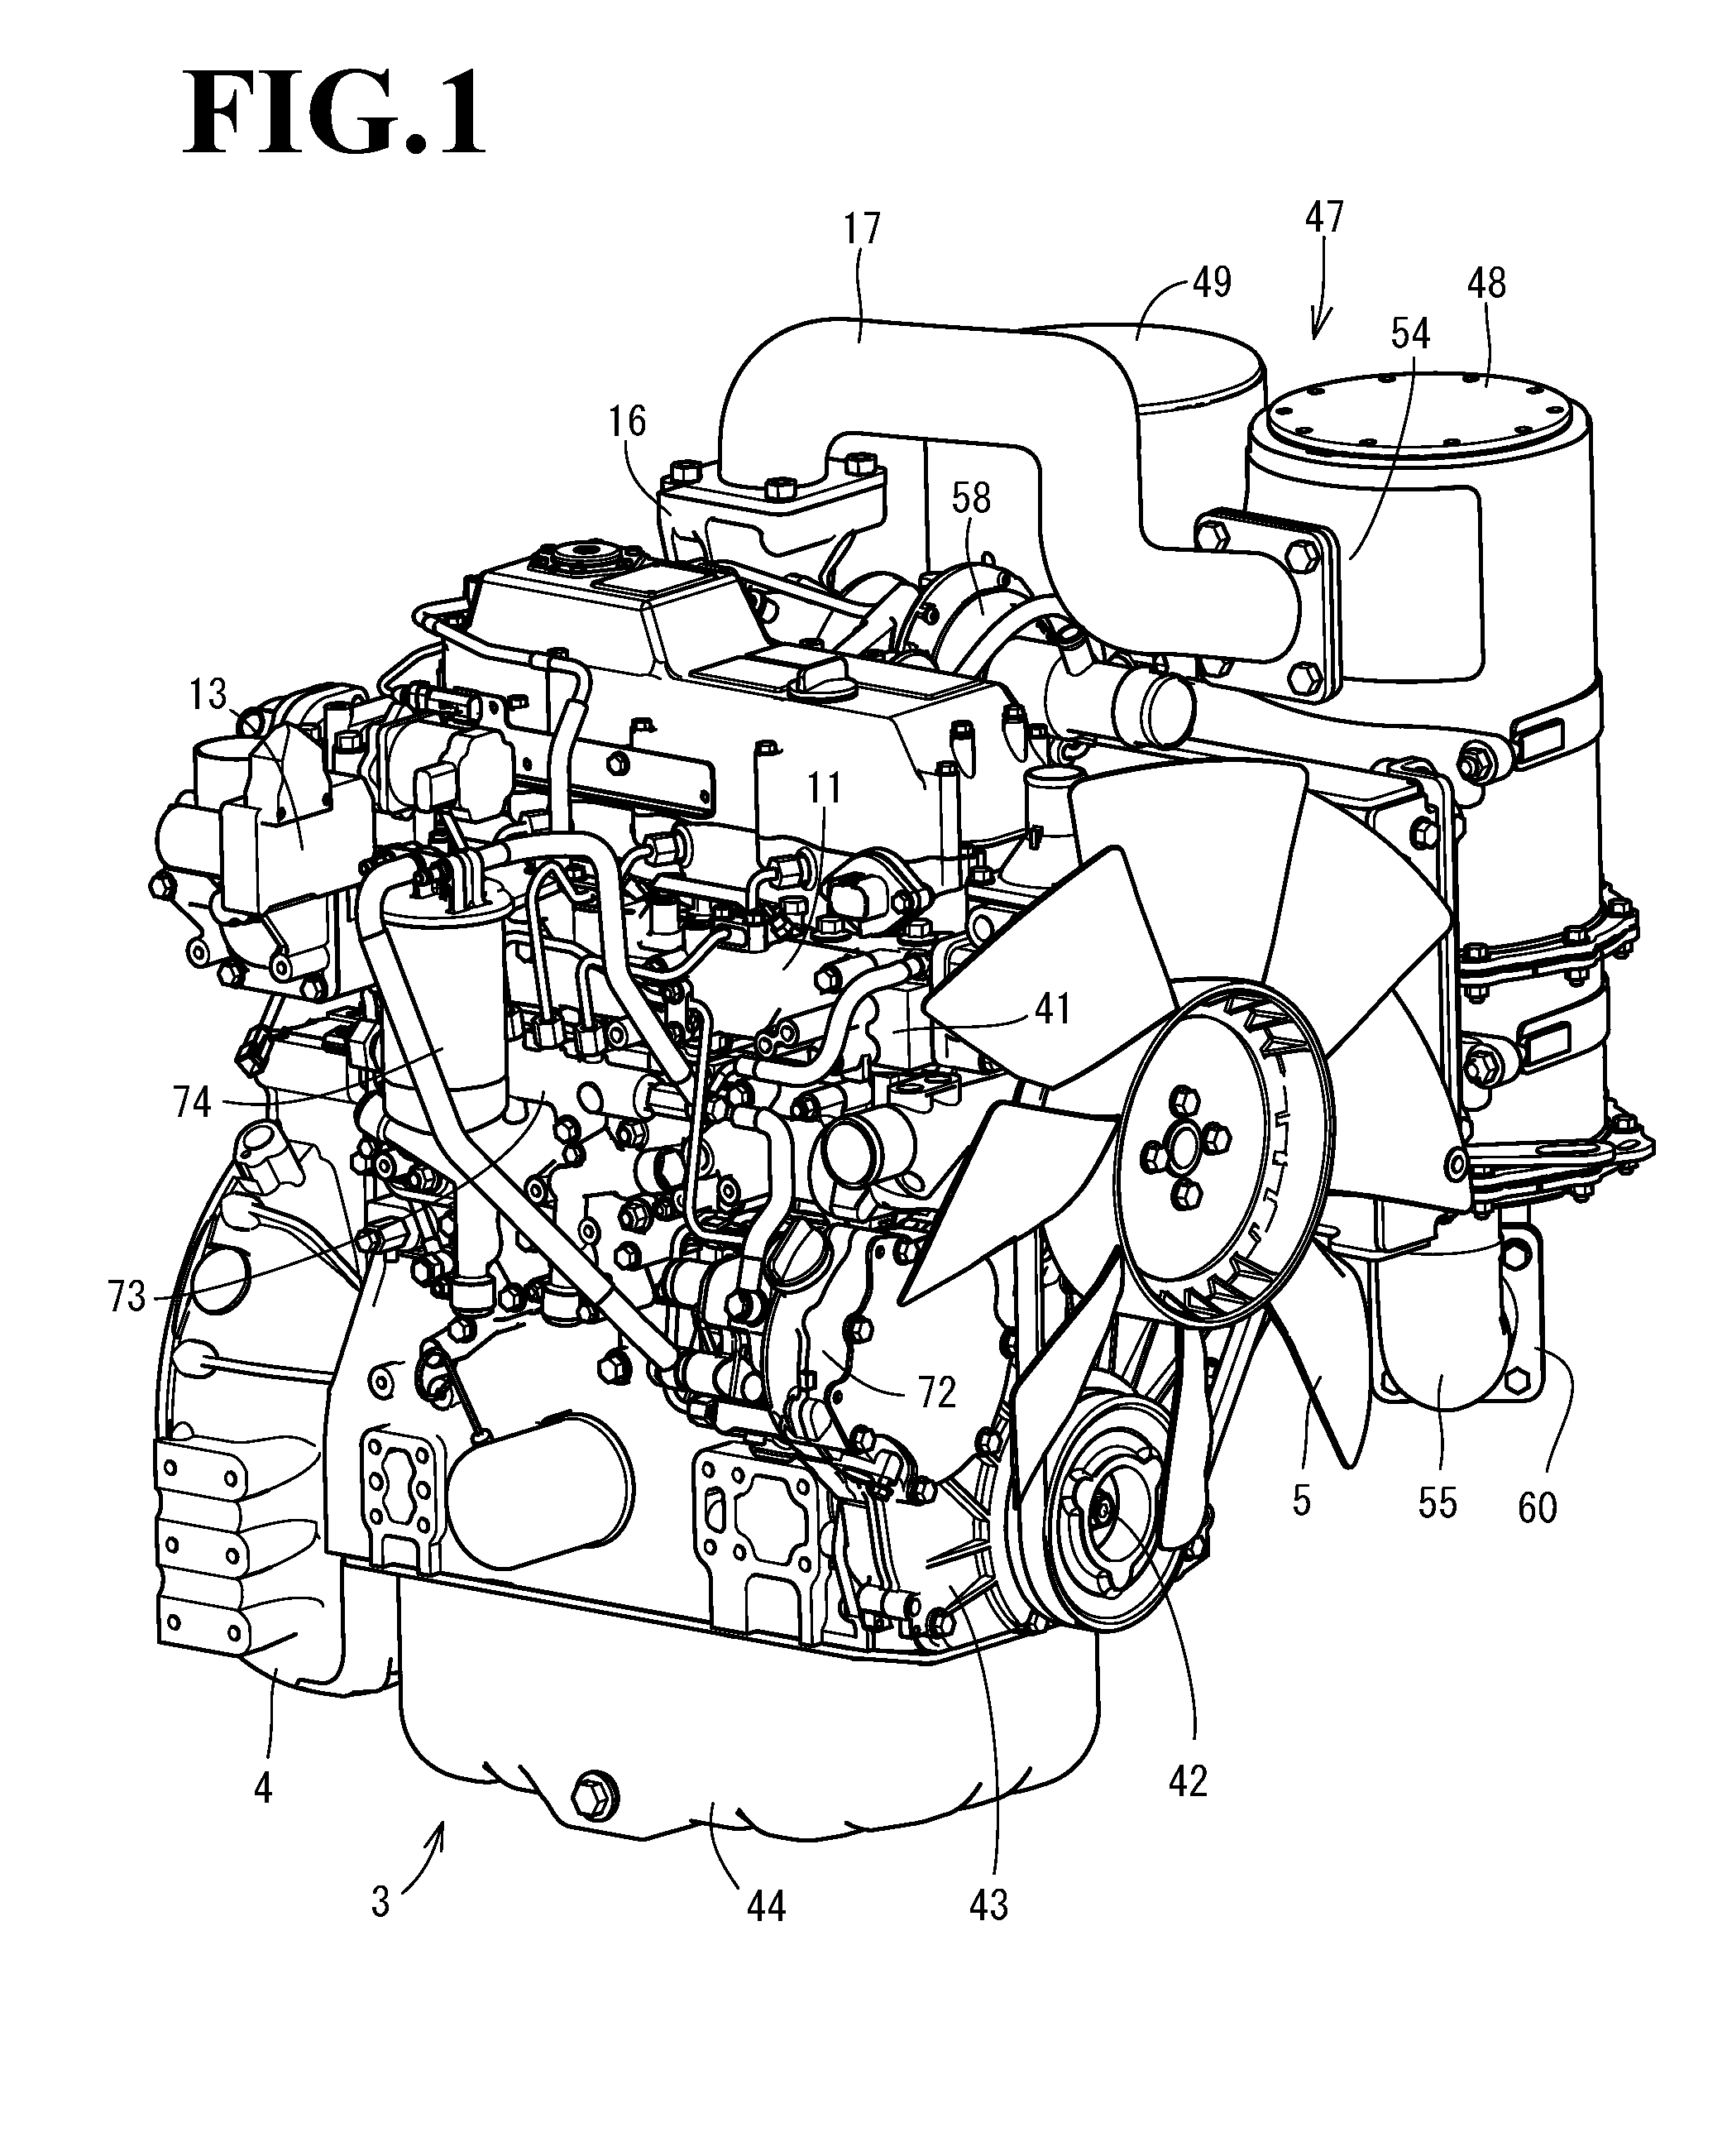 Engine device